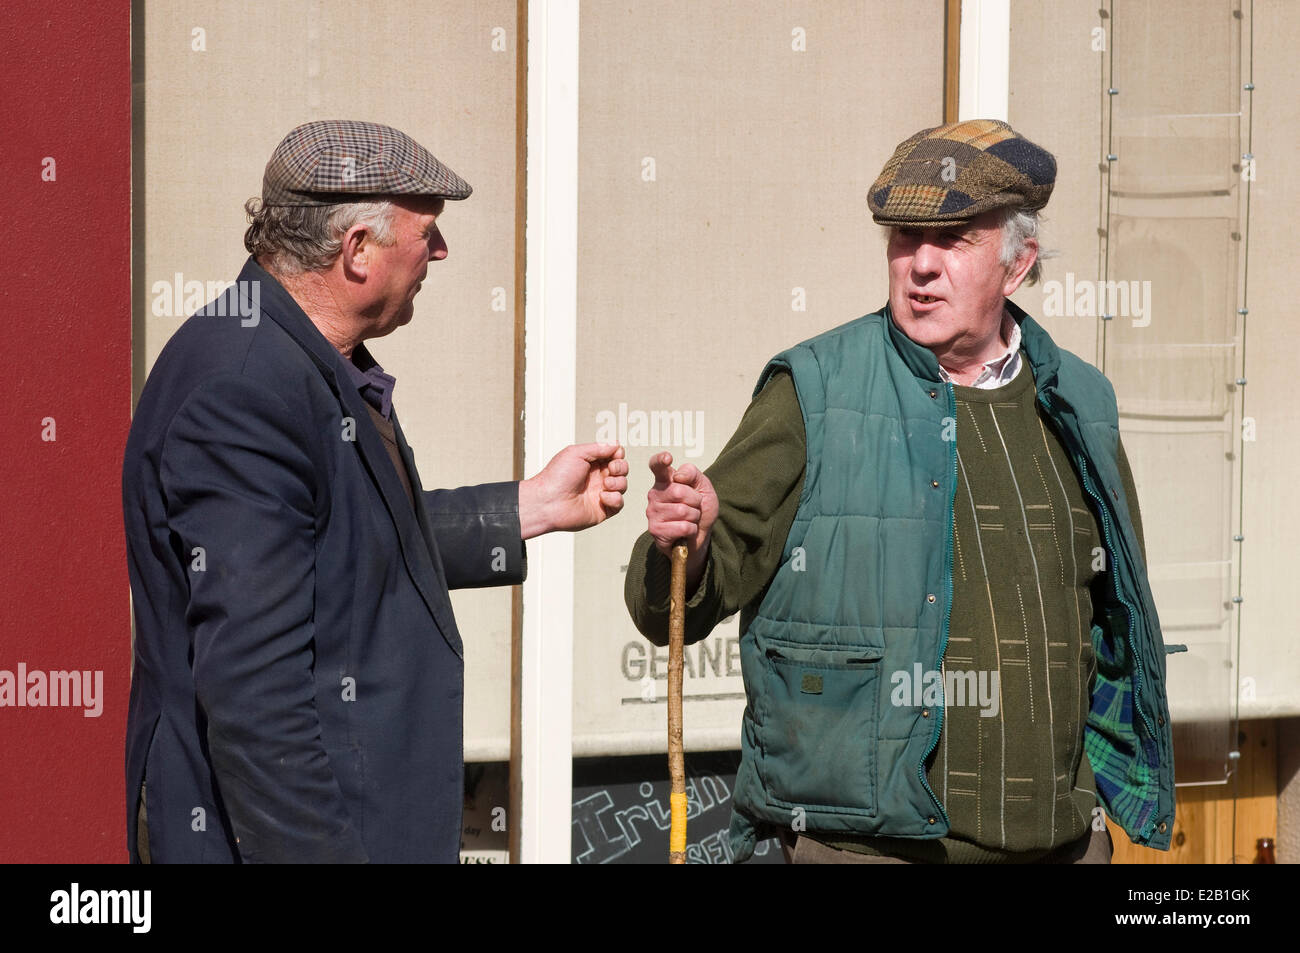 Ireland, County Kerry, Dingle Peninsula, Dingle, two men talking Stock Photo